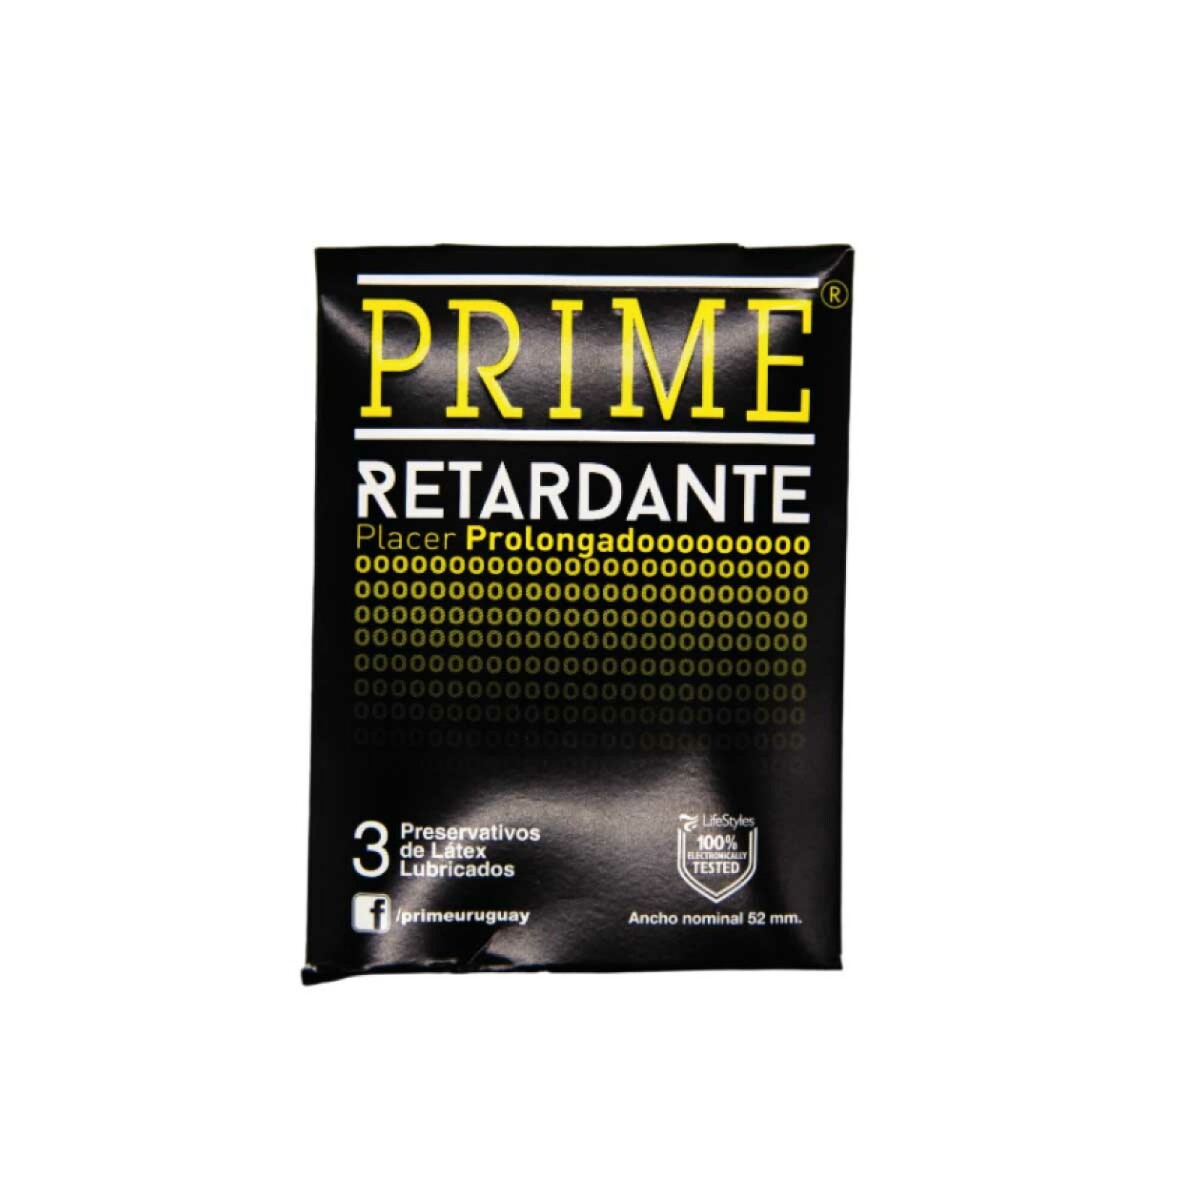 Preservativos Prime x3 - Retardante 